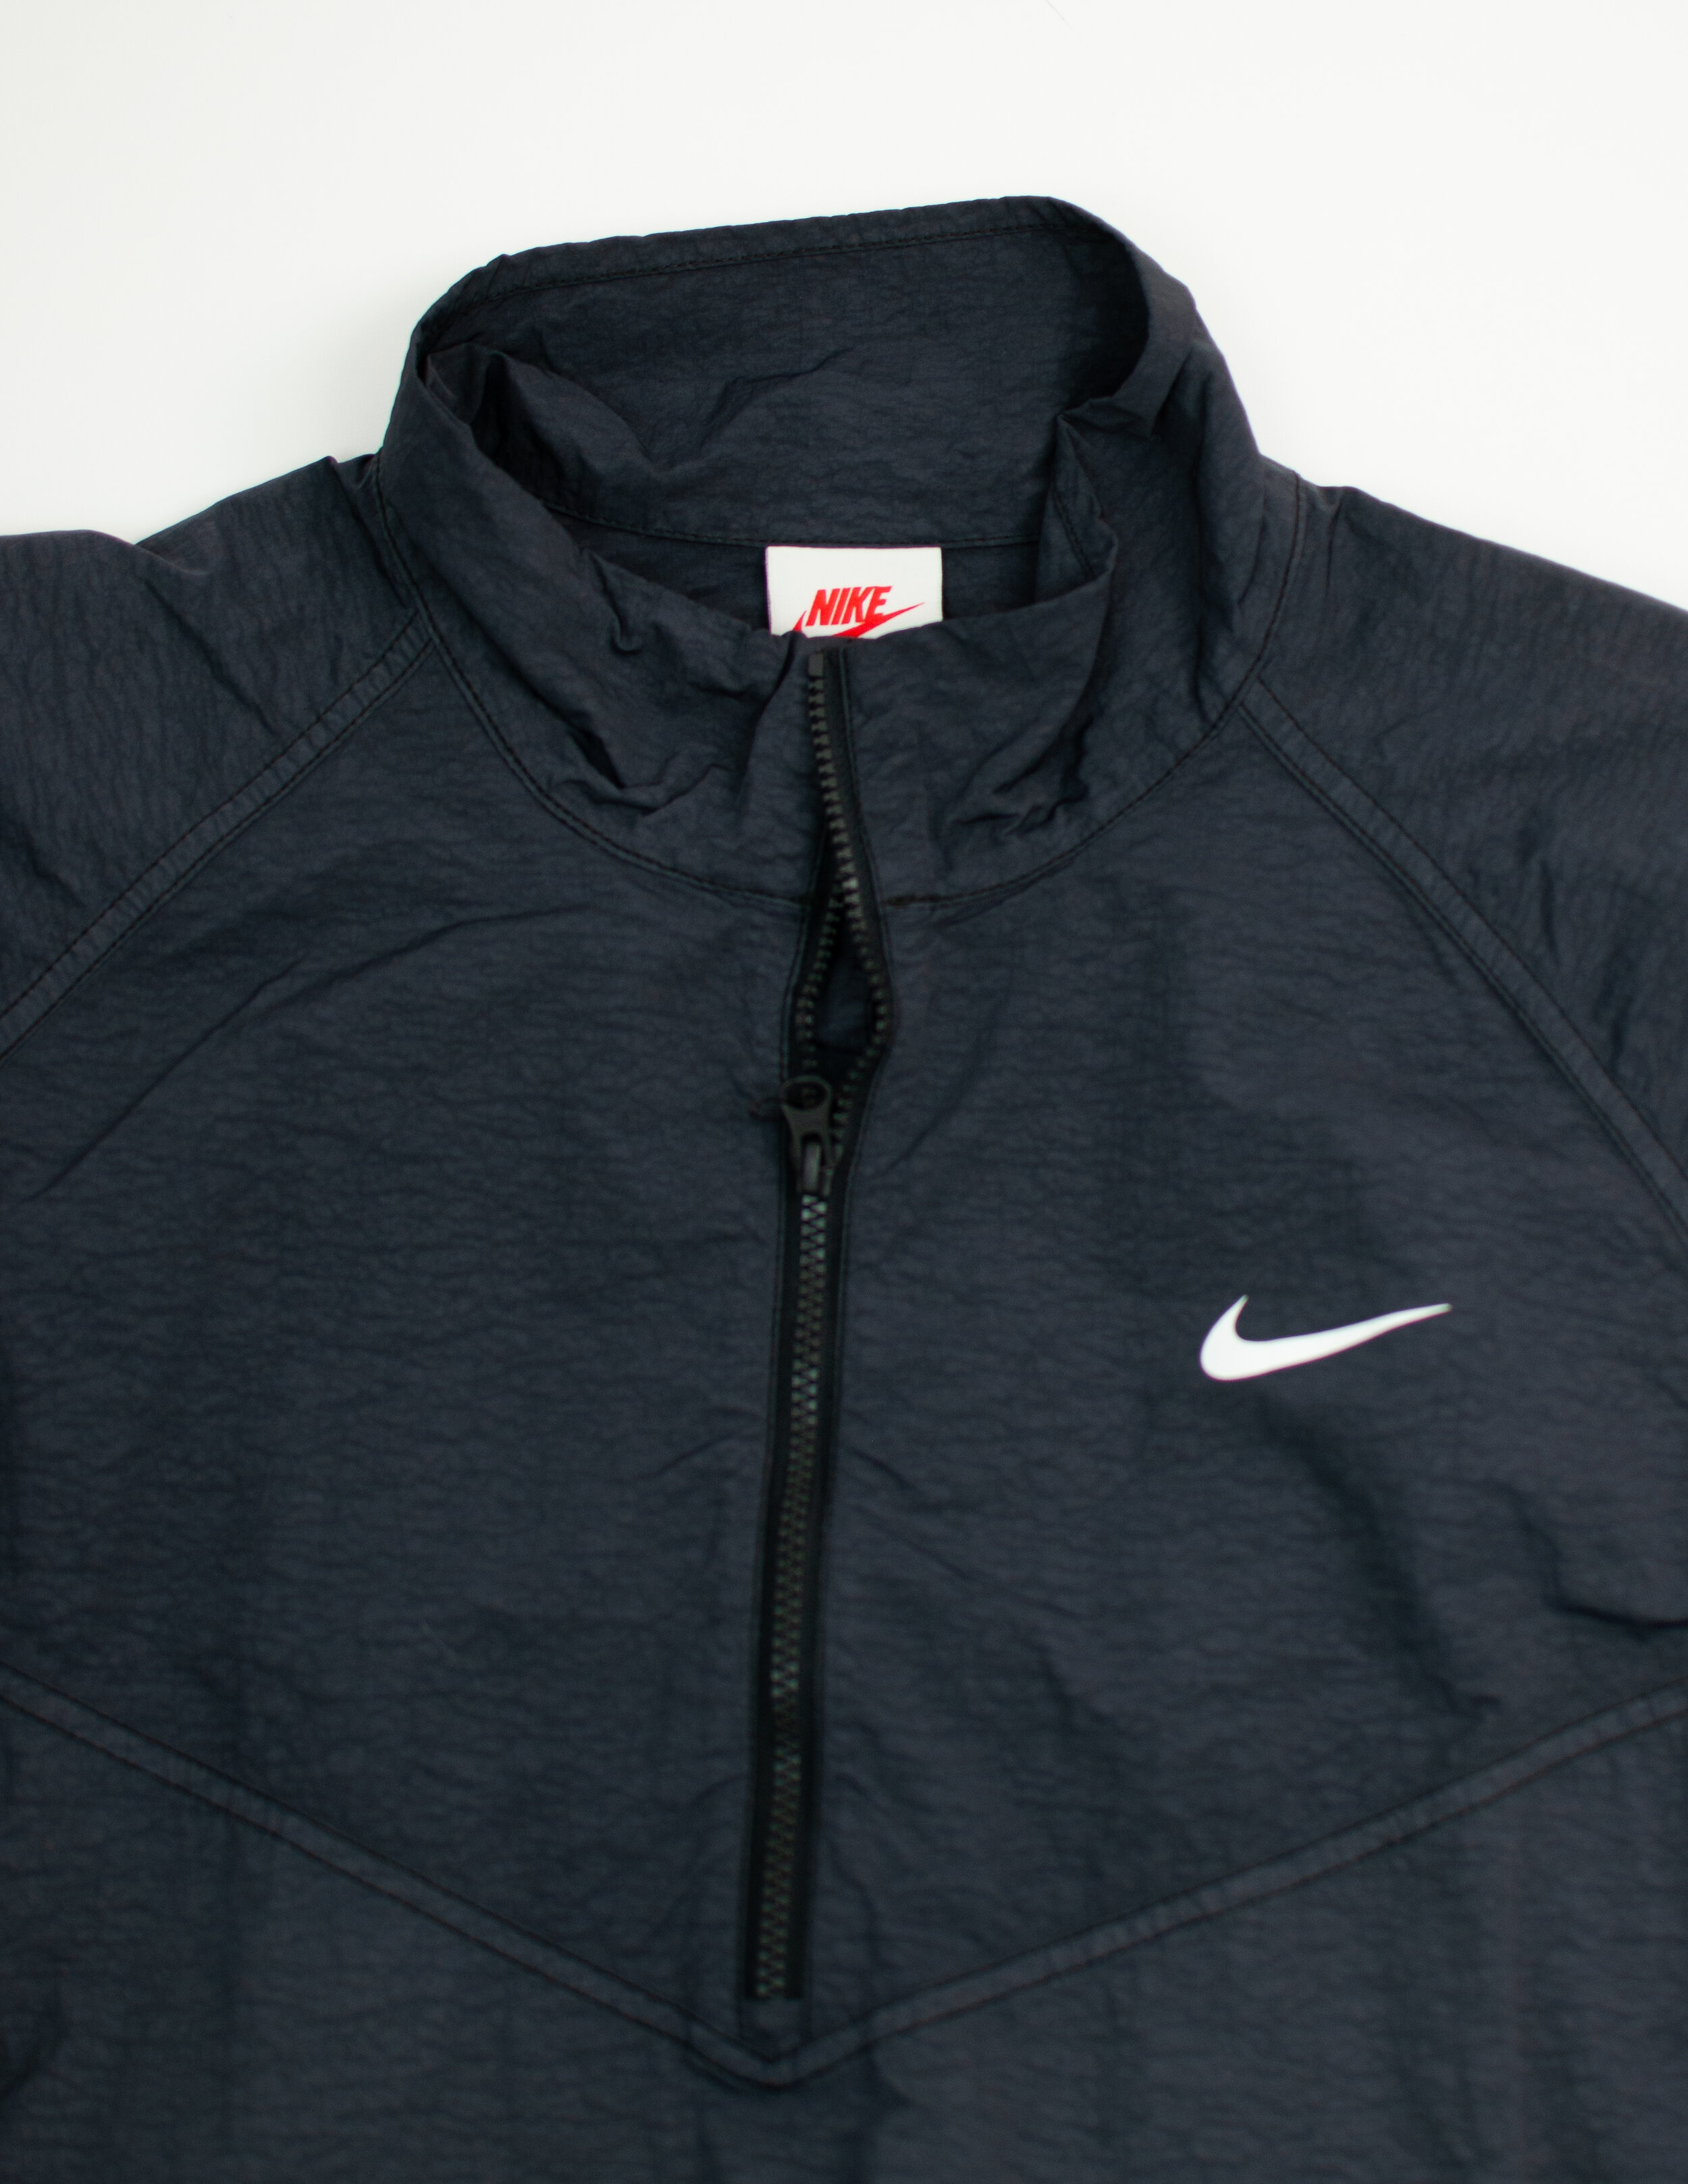 Nike x Stussy 'Garment Dyed Windrunner' Jacket (2020)<br/> — The 